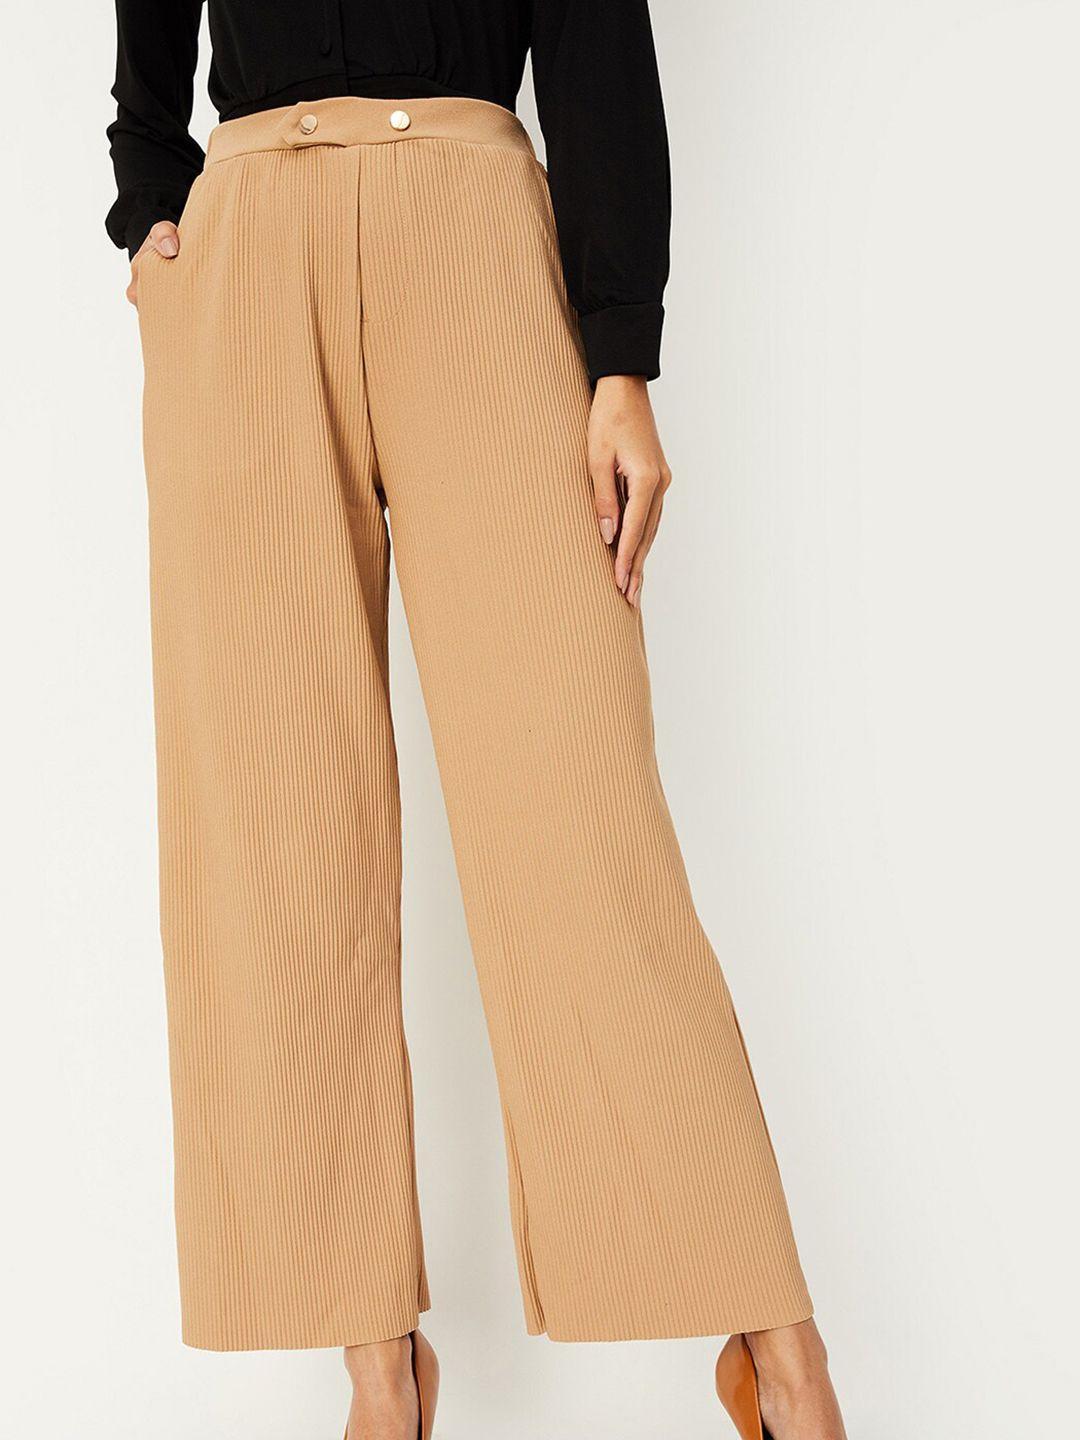 max-women-beige-pleated-trousers